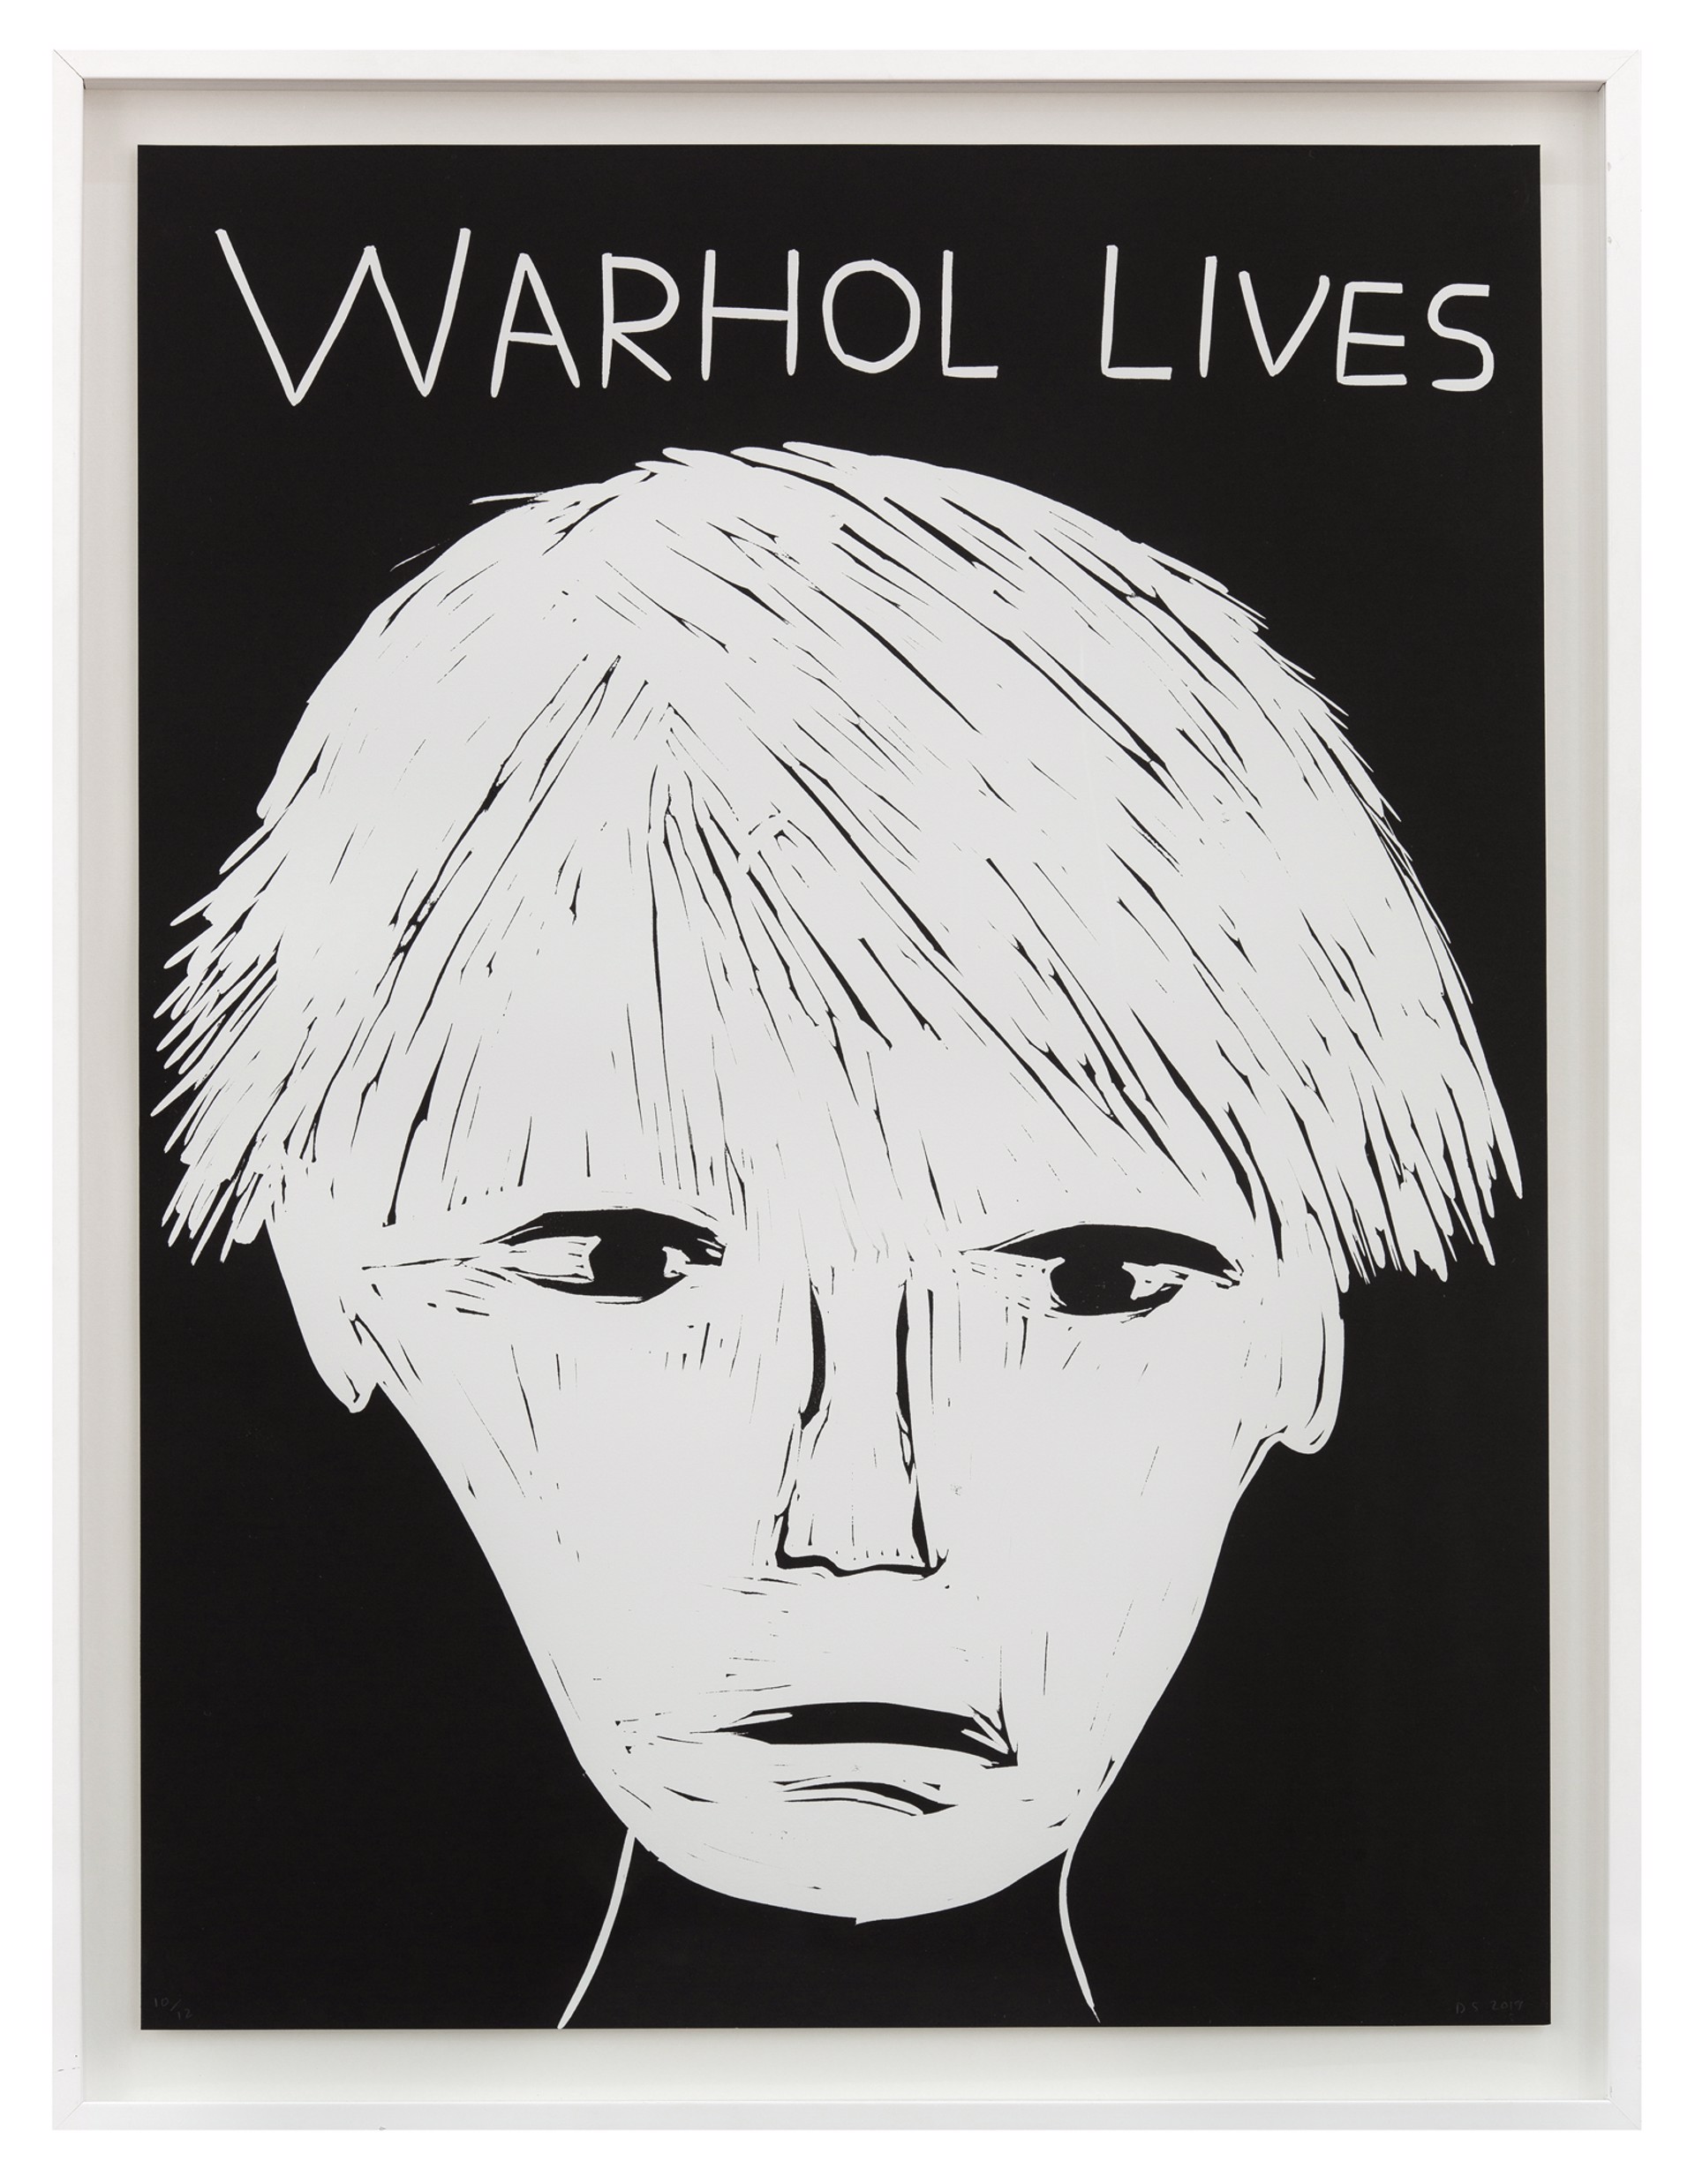 Warhol Lives by David Shrigley